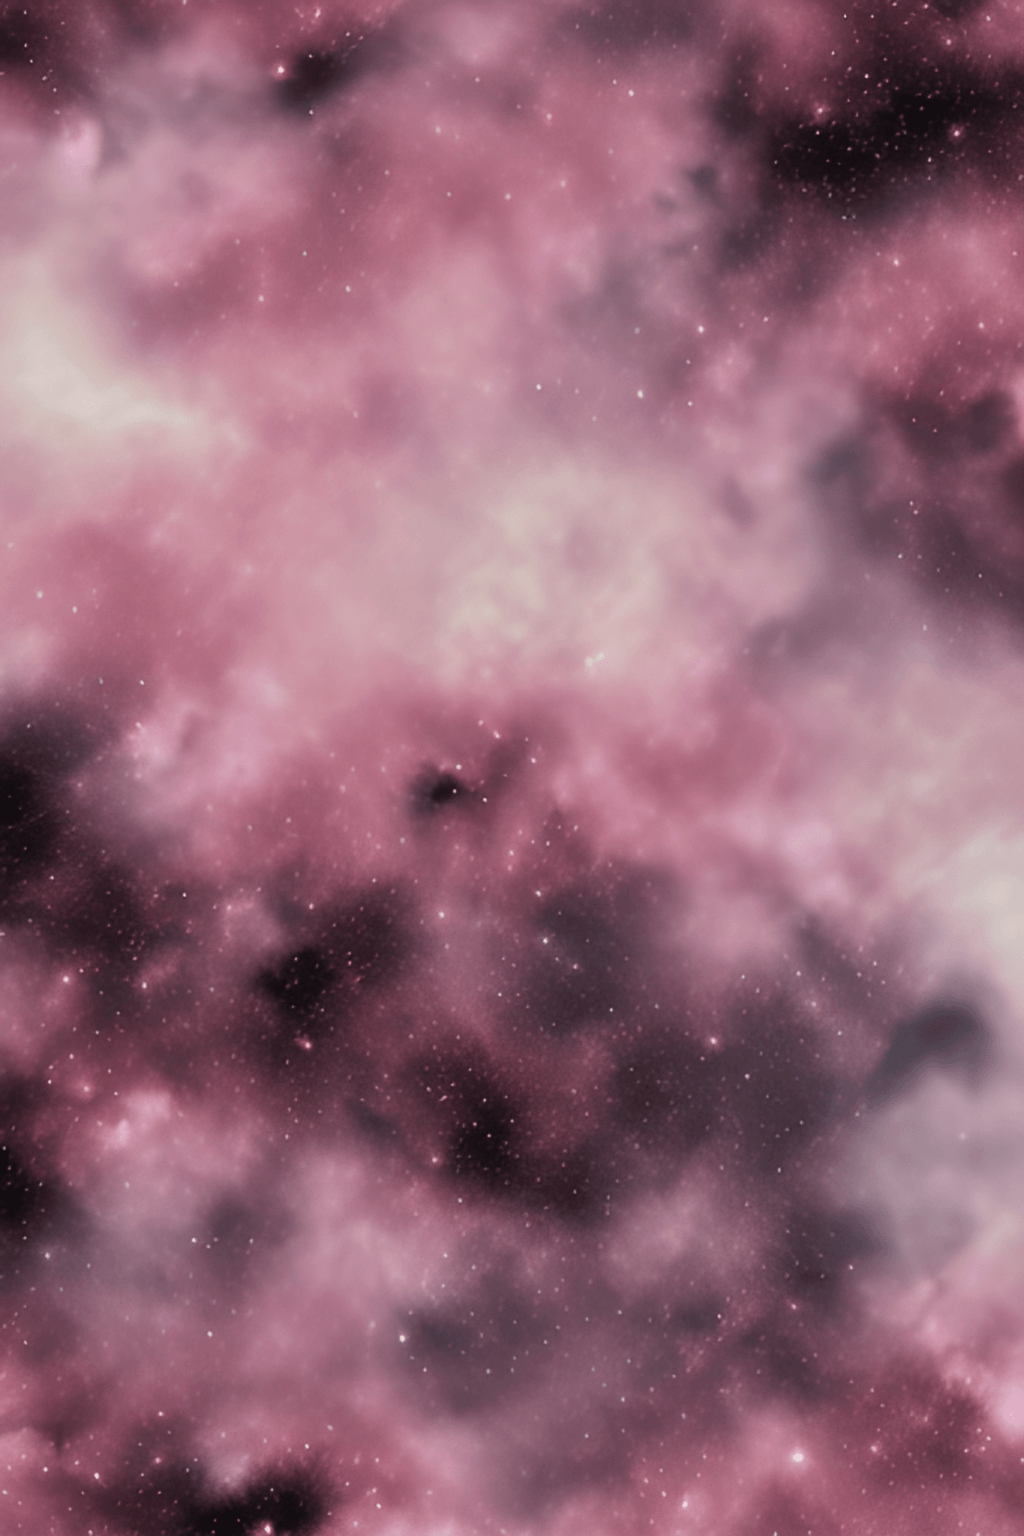  Hellrosa Hintergrundbild 1024x1536. Hellrosa Braune Cremefarbene Nebel Hintergrundgrafik · Creative Fabrica